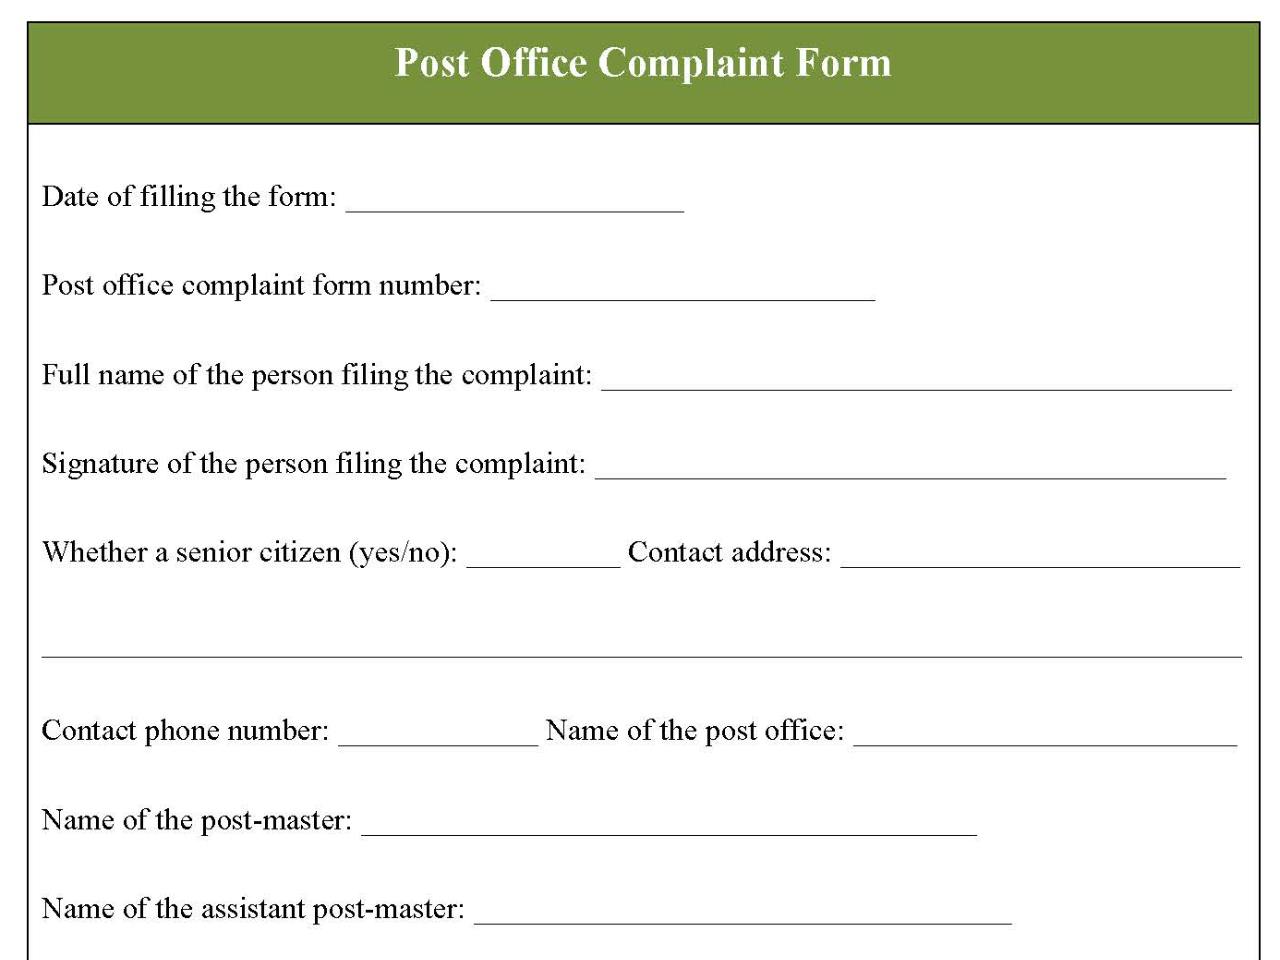 Post Office Complaint Form